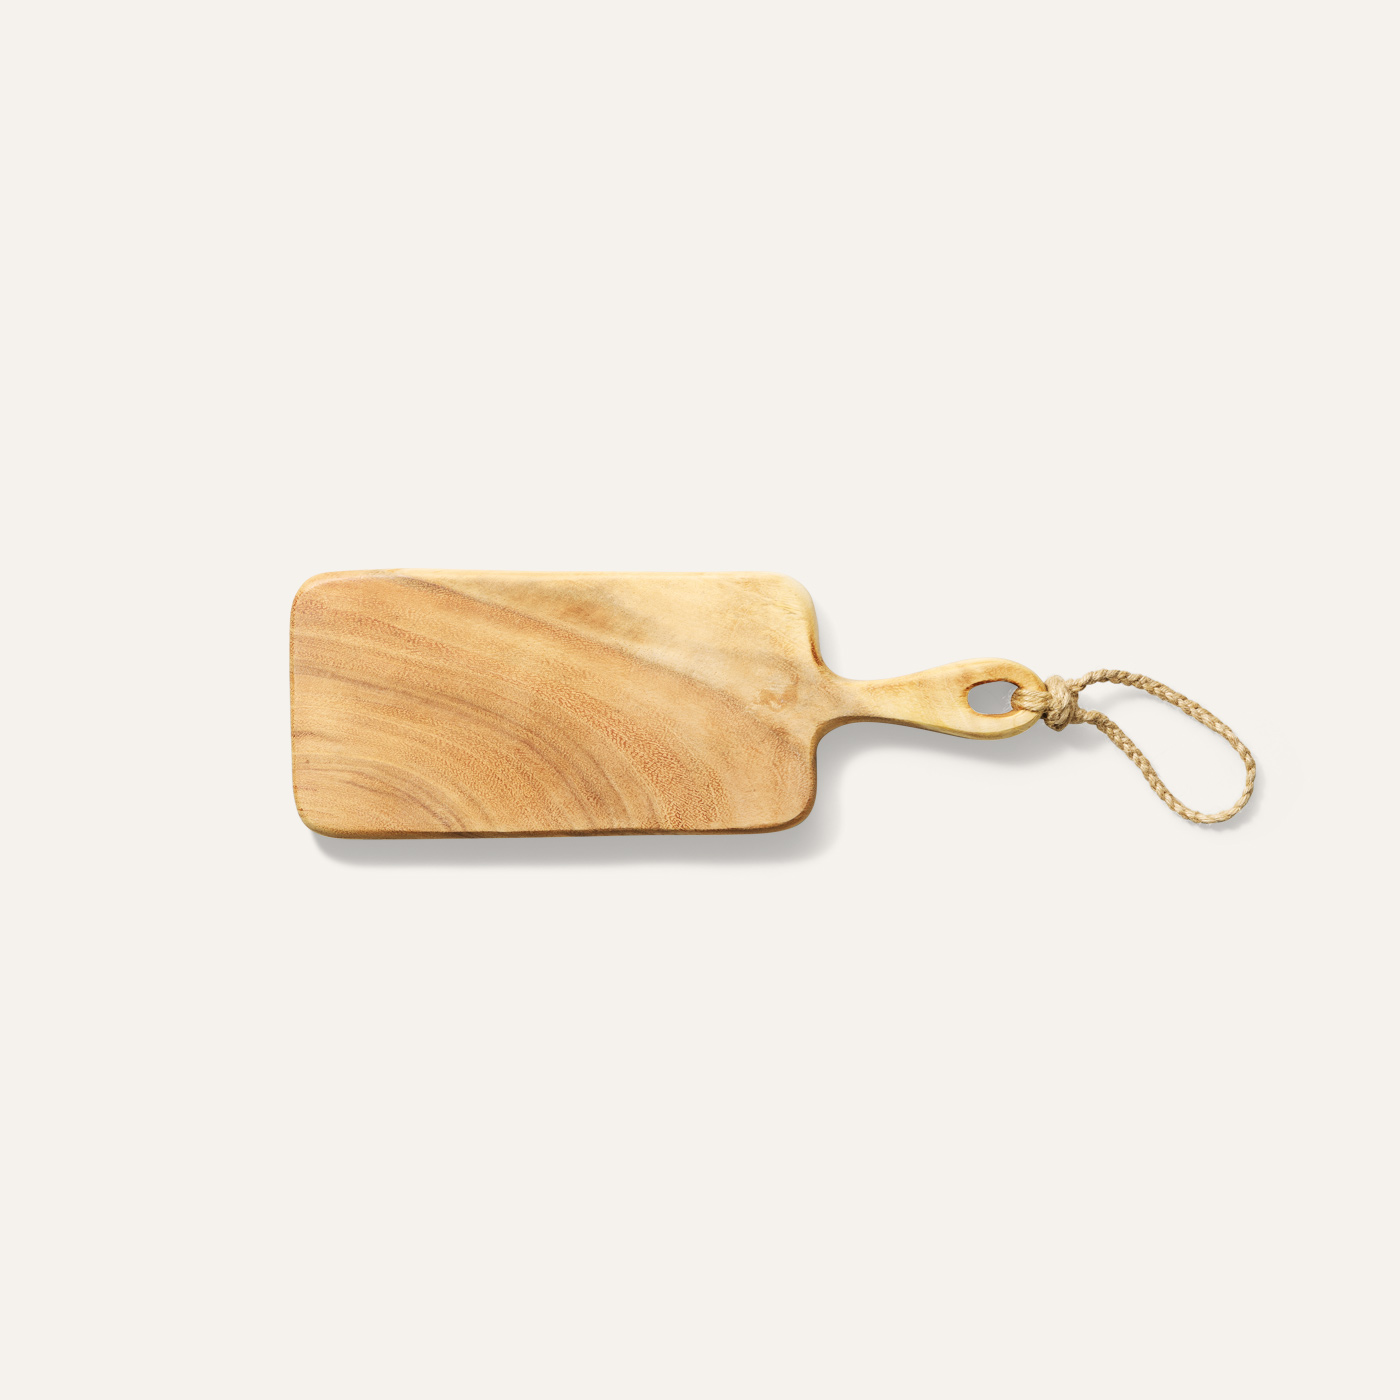 acacia cutting board